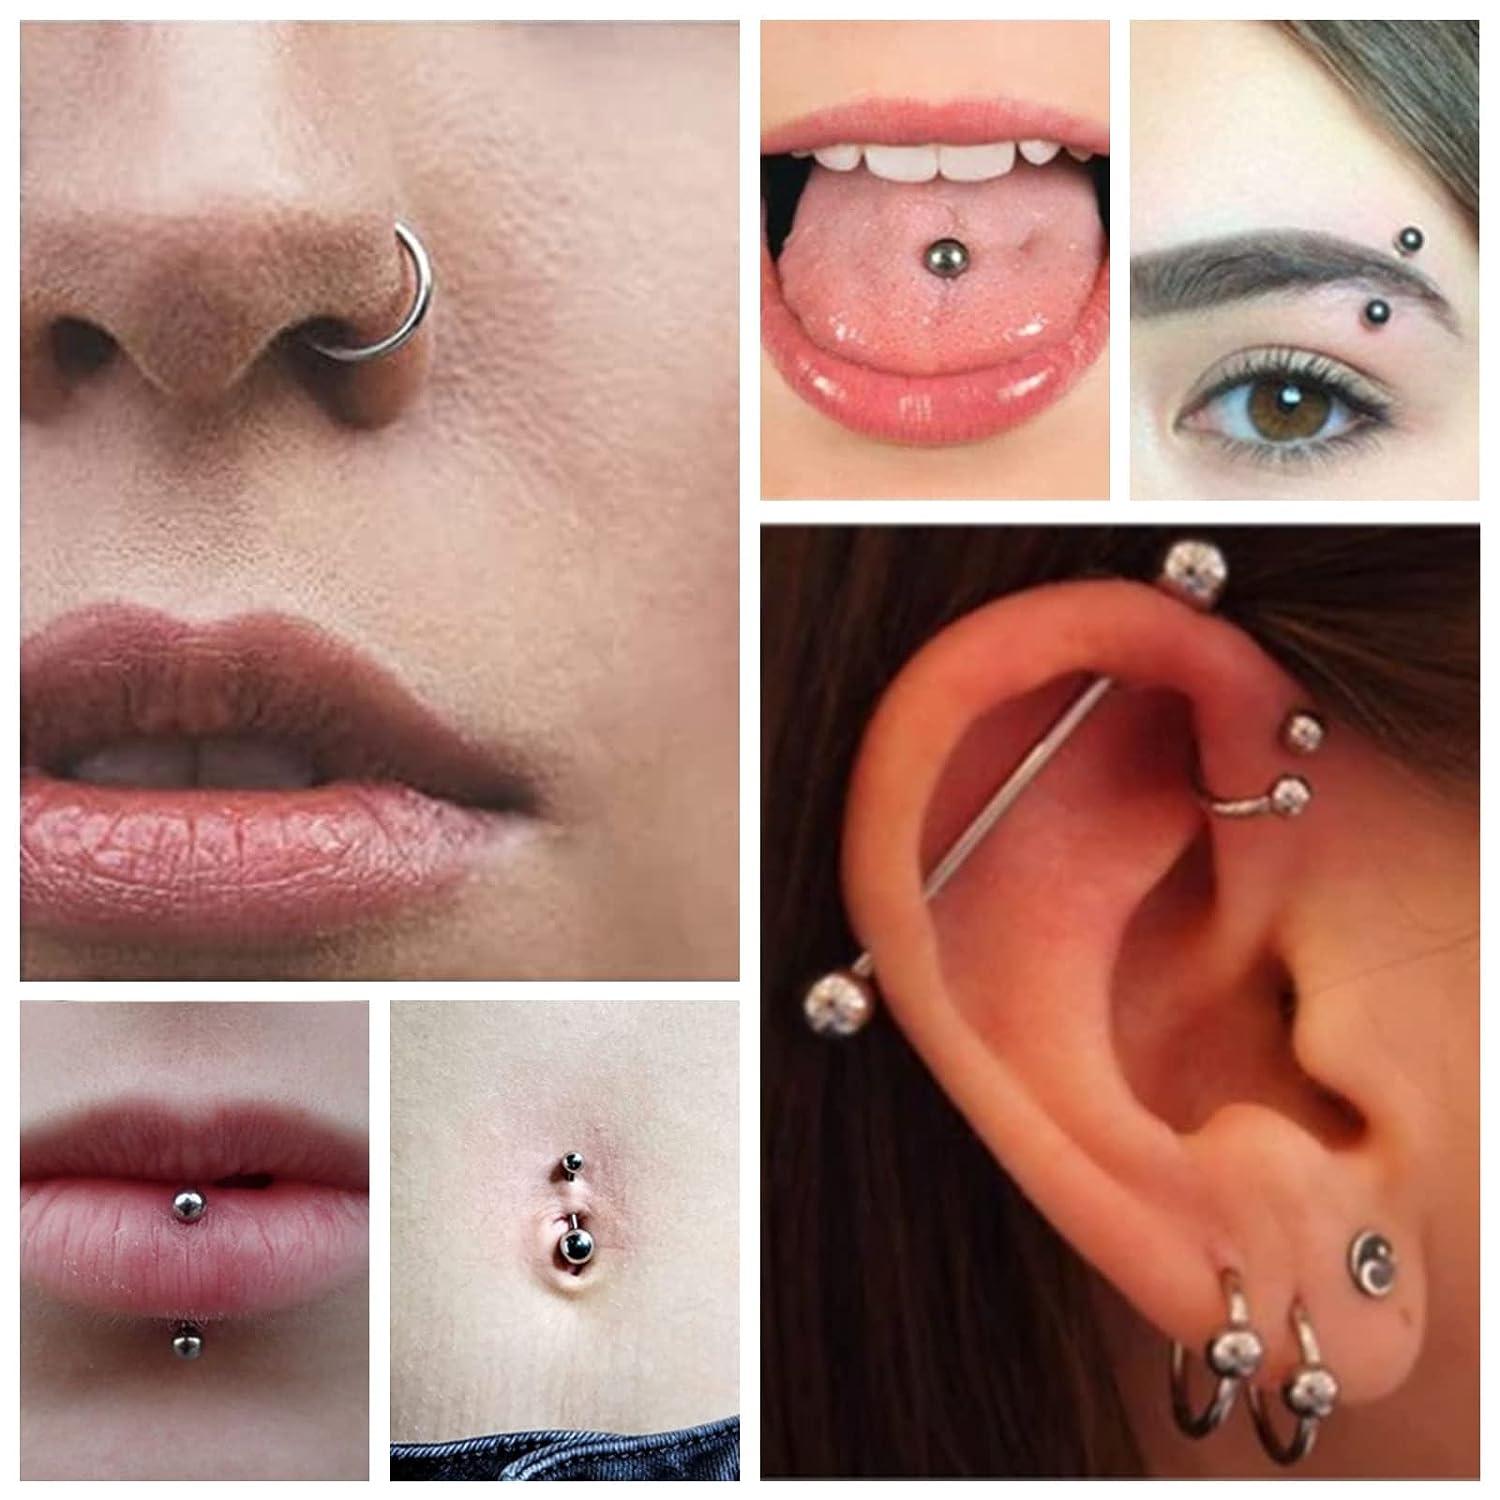 Piercing Kit, Body Piercing Pliers Tool Ear Lip Navel Nose Tongue